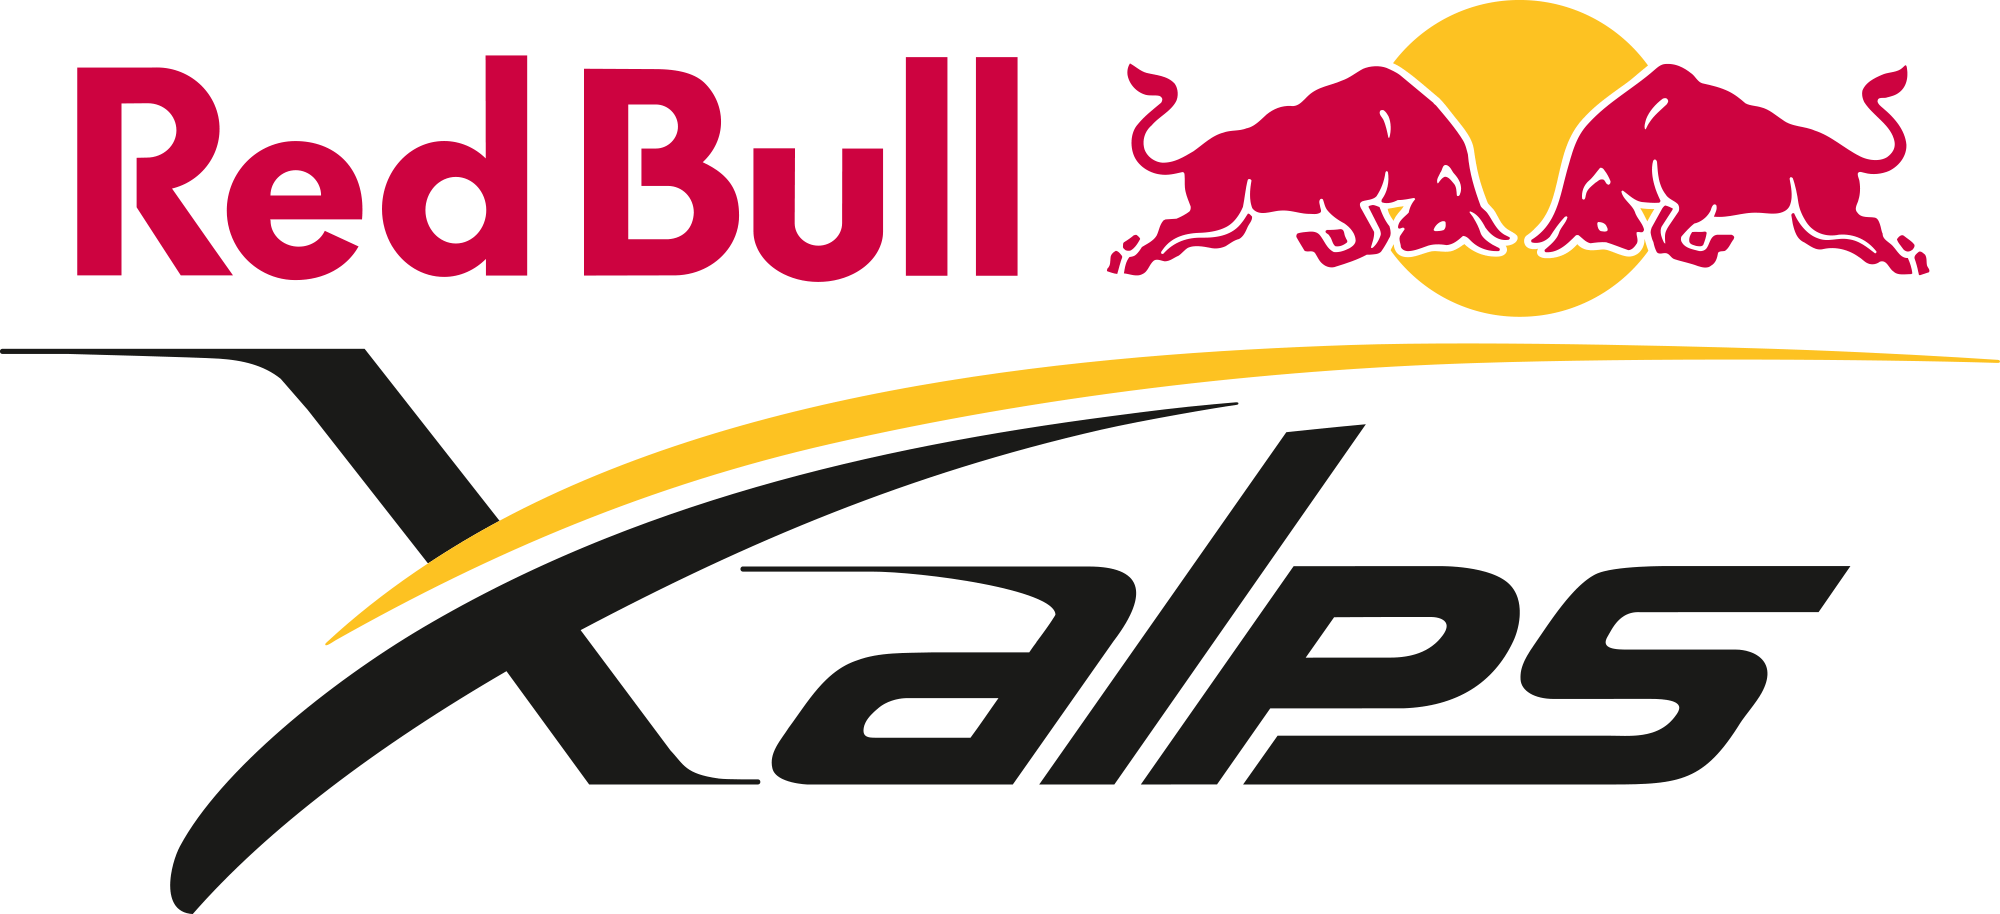 Red Bull X Alps - Red Bull X Alps (2000x914)